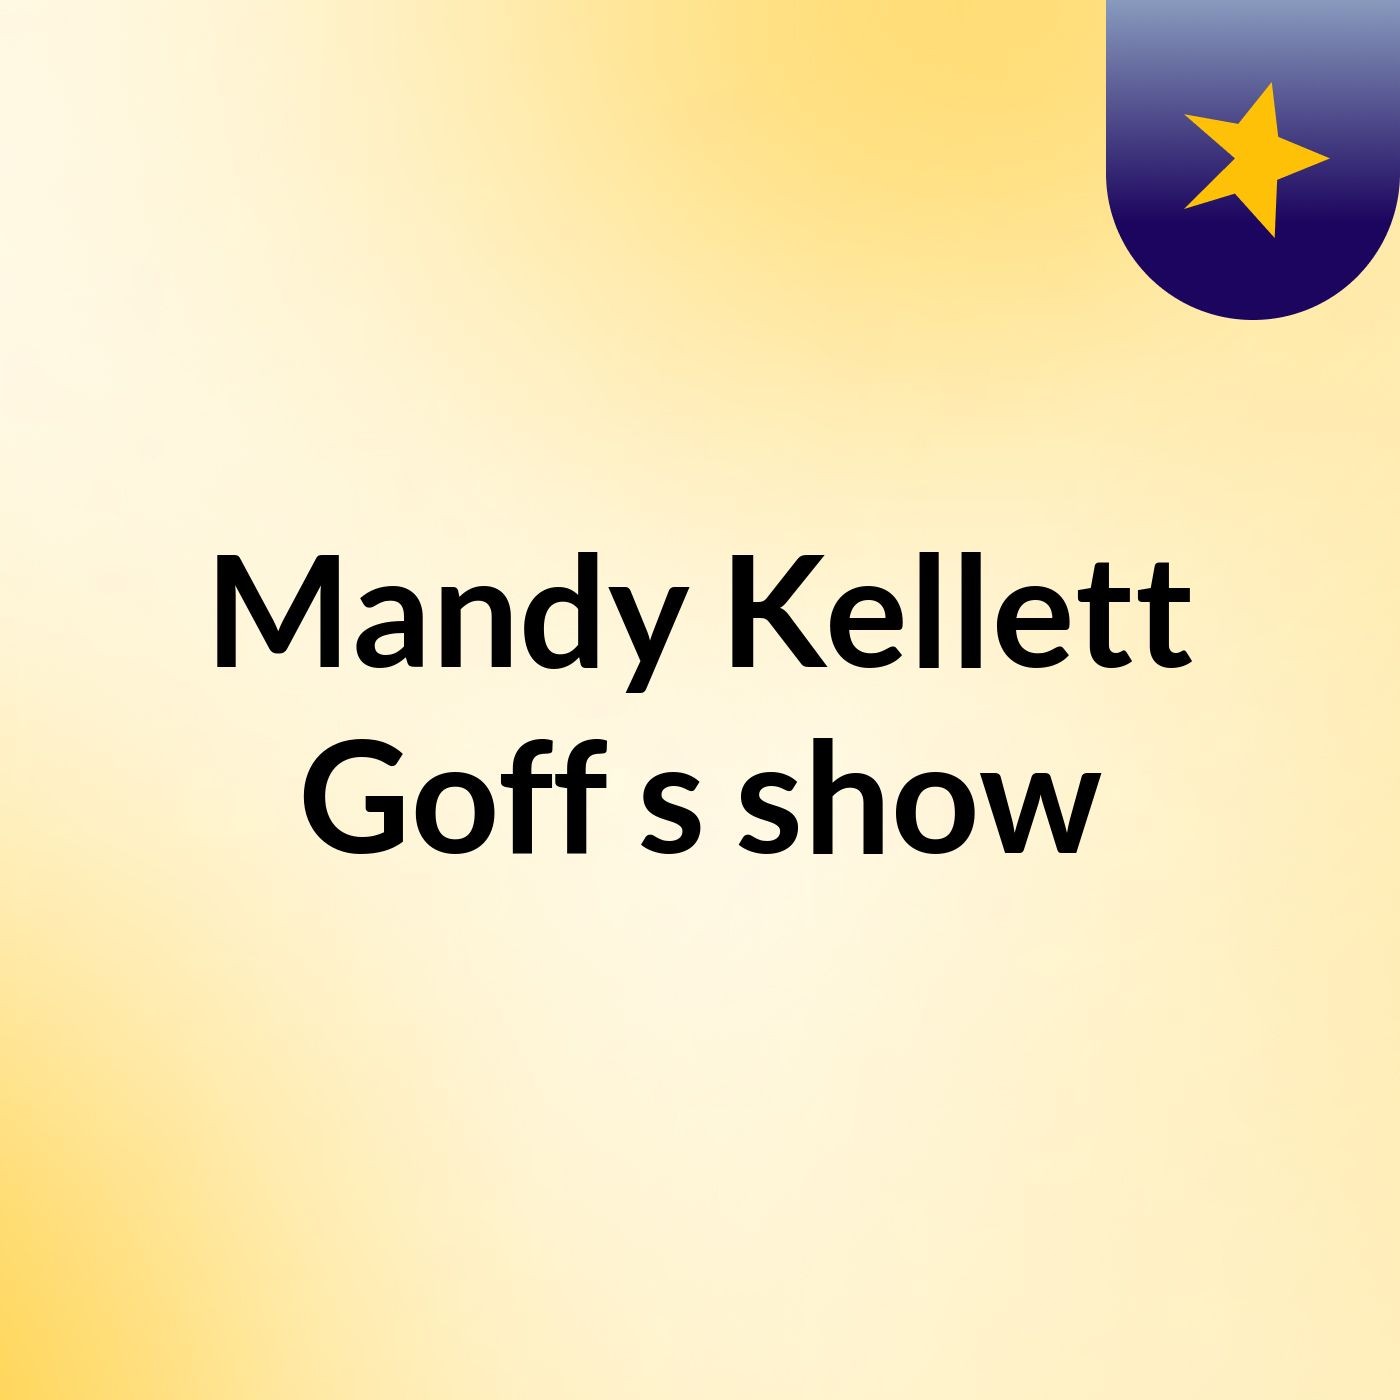 Mandy Kellett Goff's show